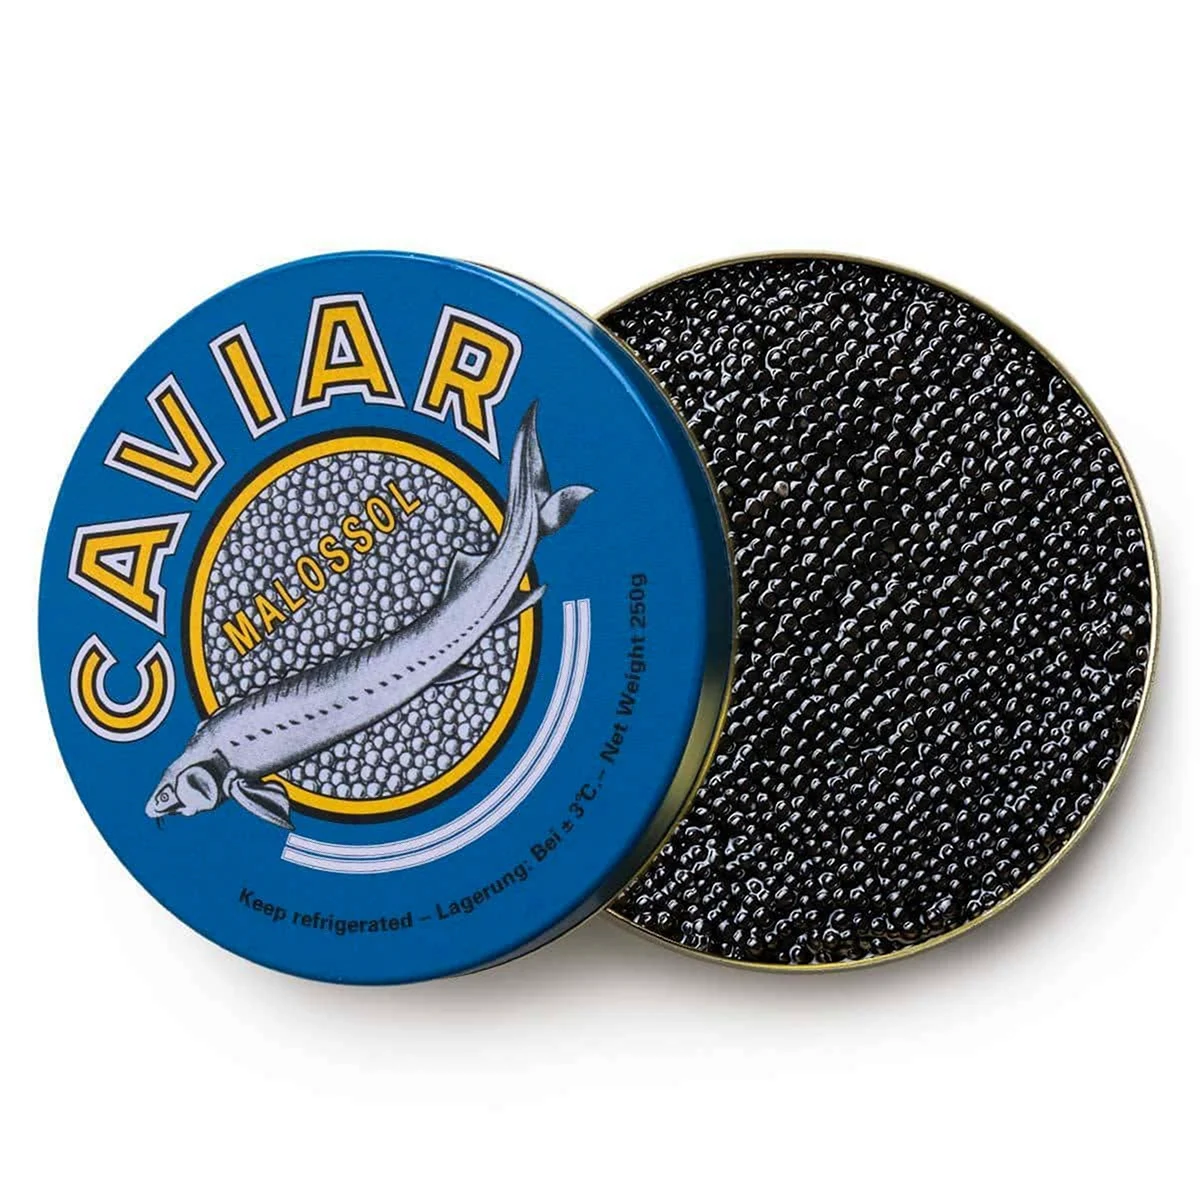 Caviar Malossol икра черная